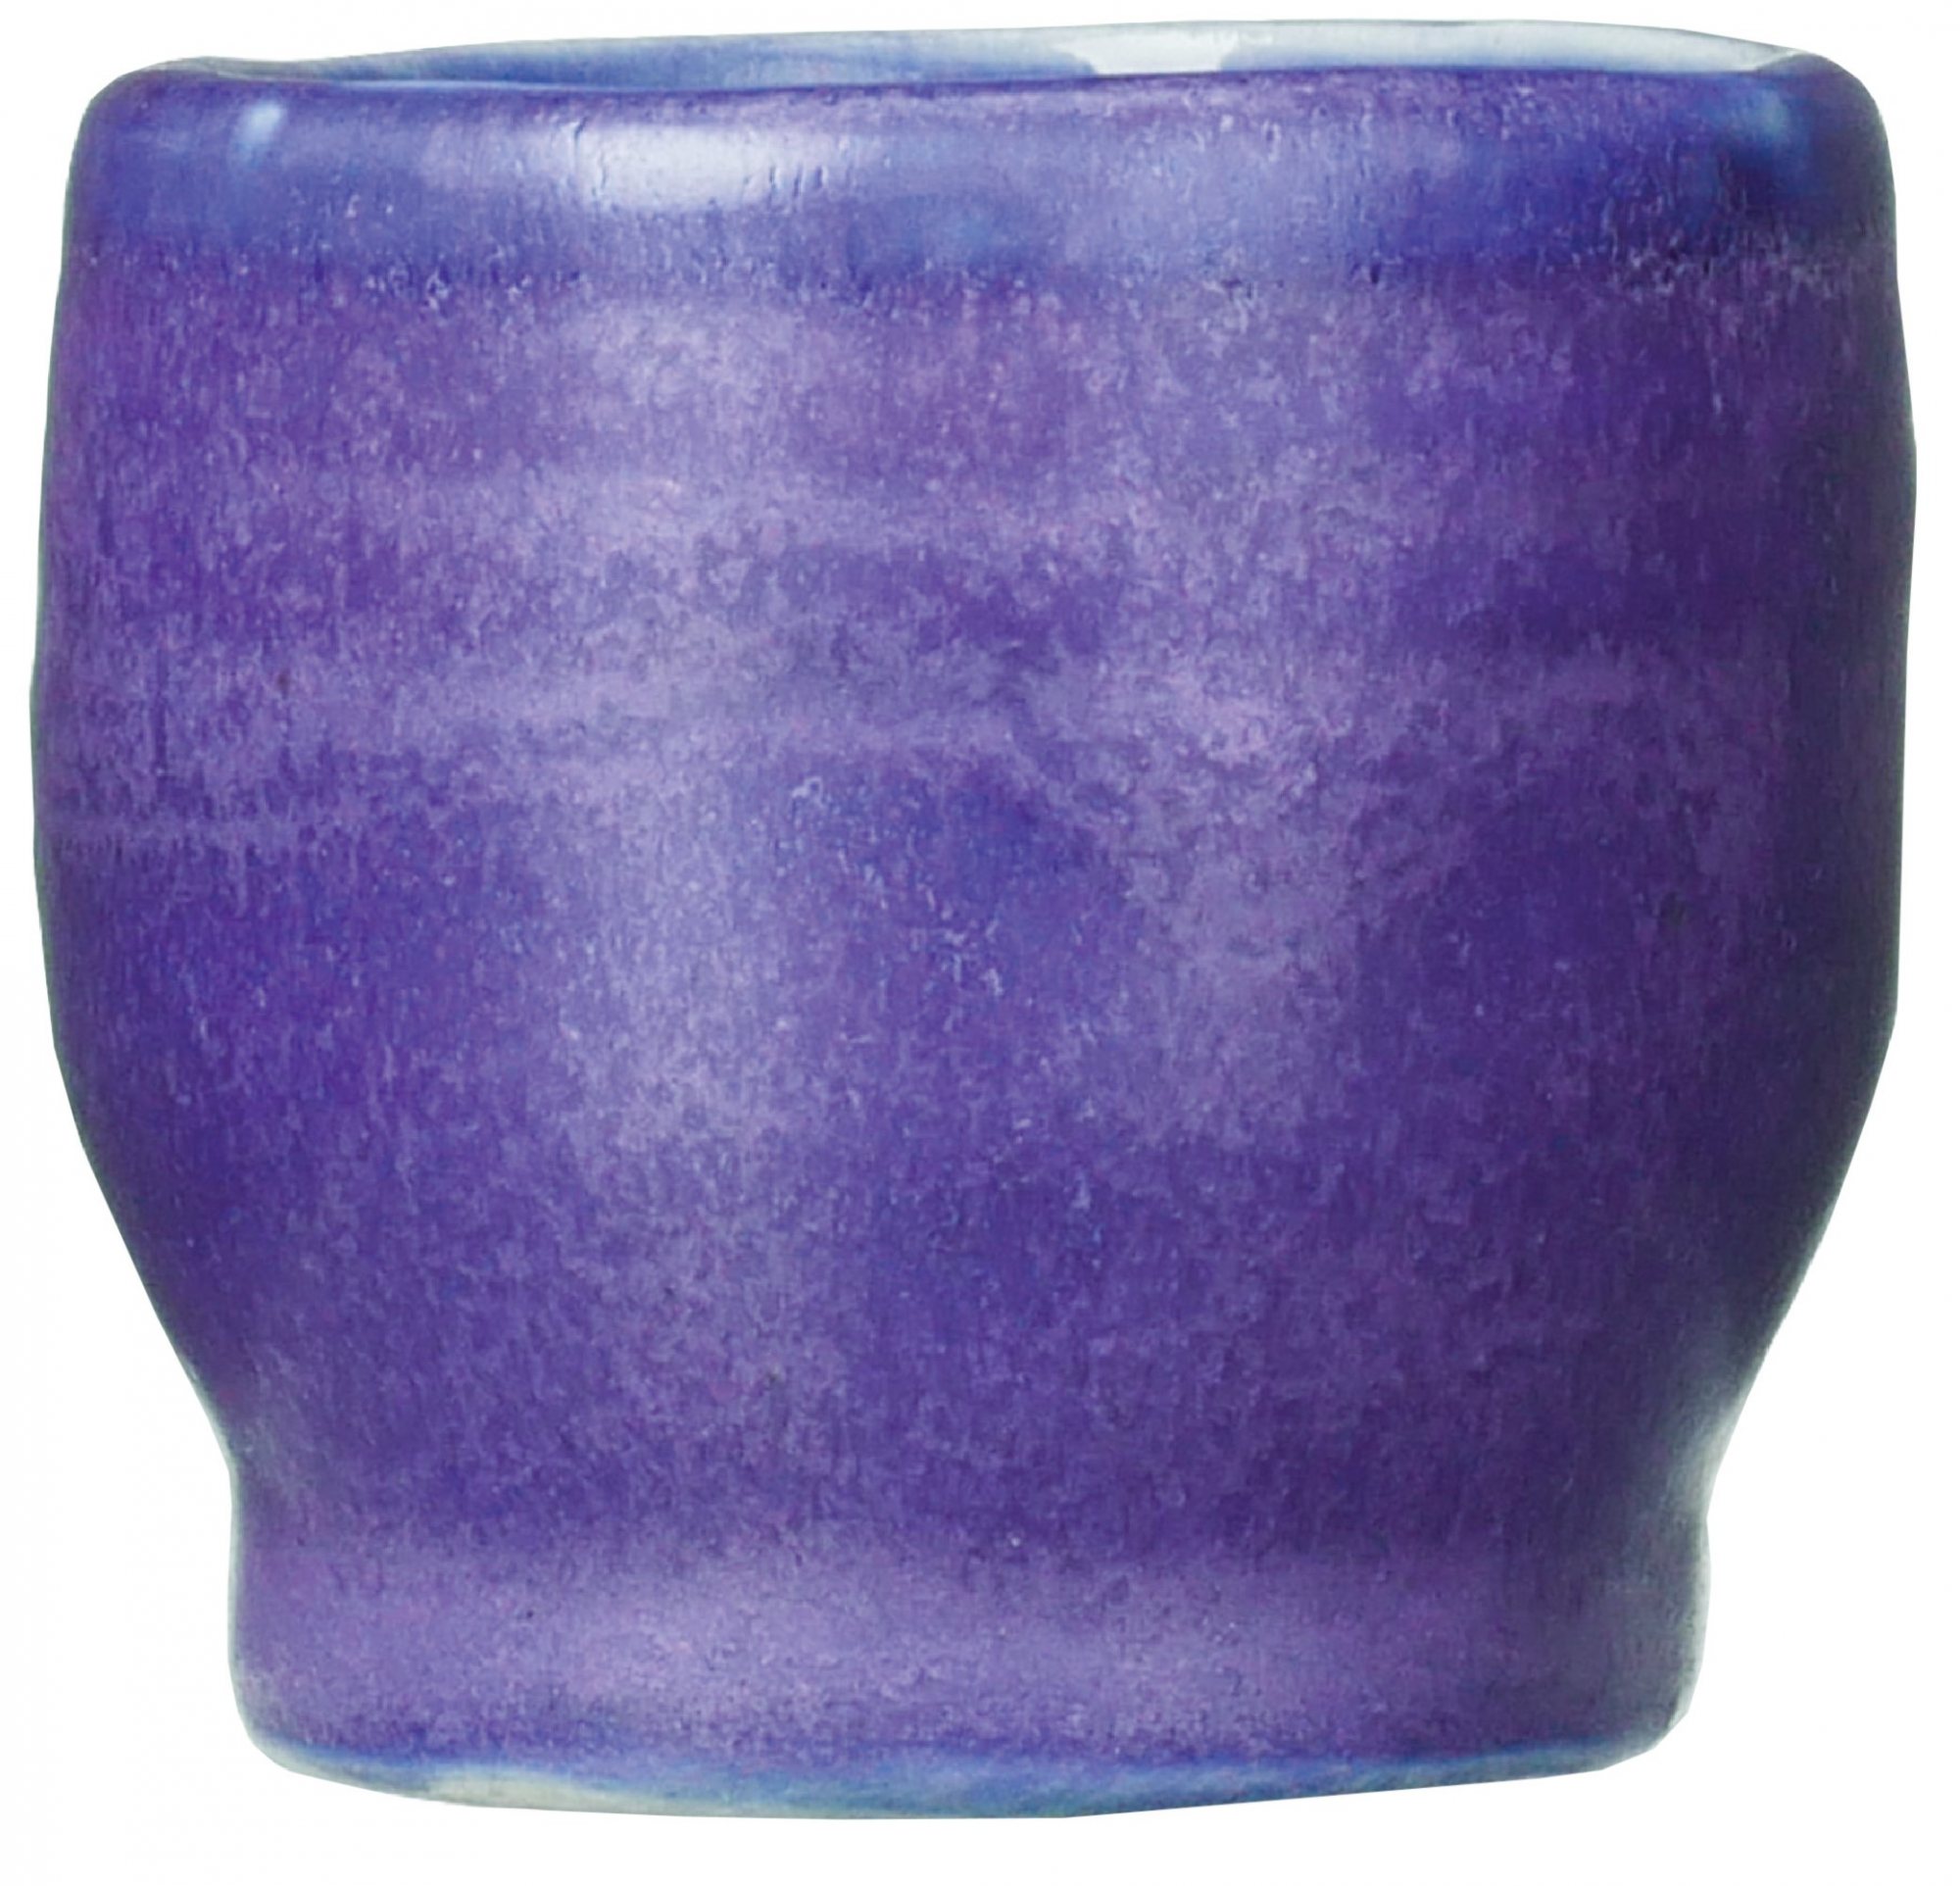 AMACO Potters Choice Cone 5/6 - Potclays